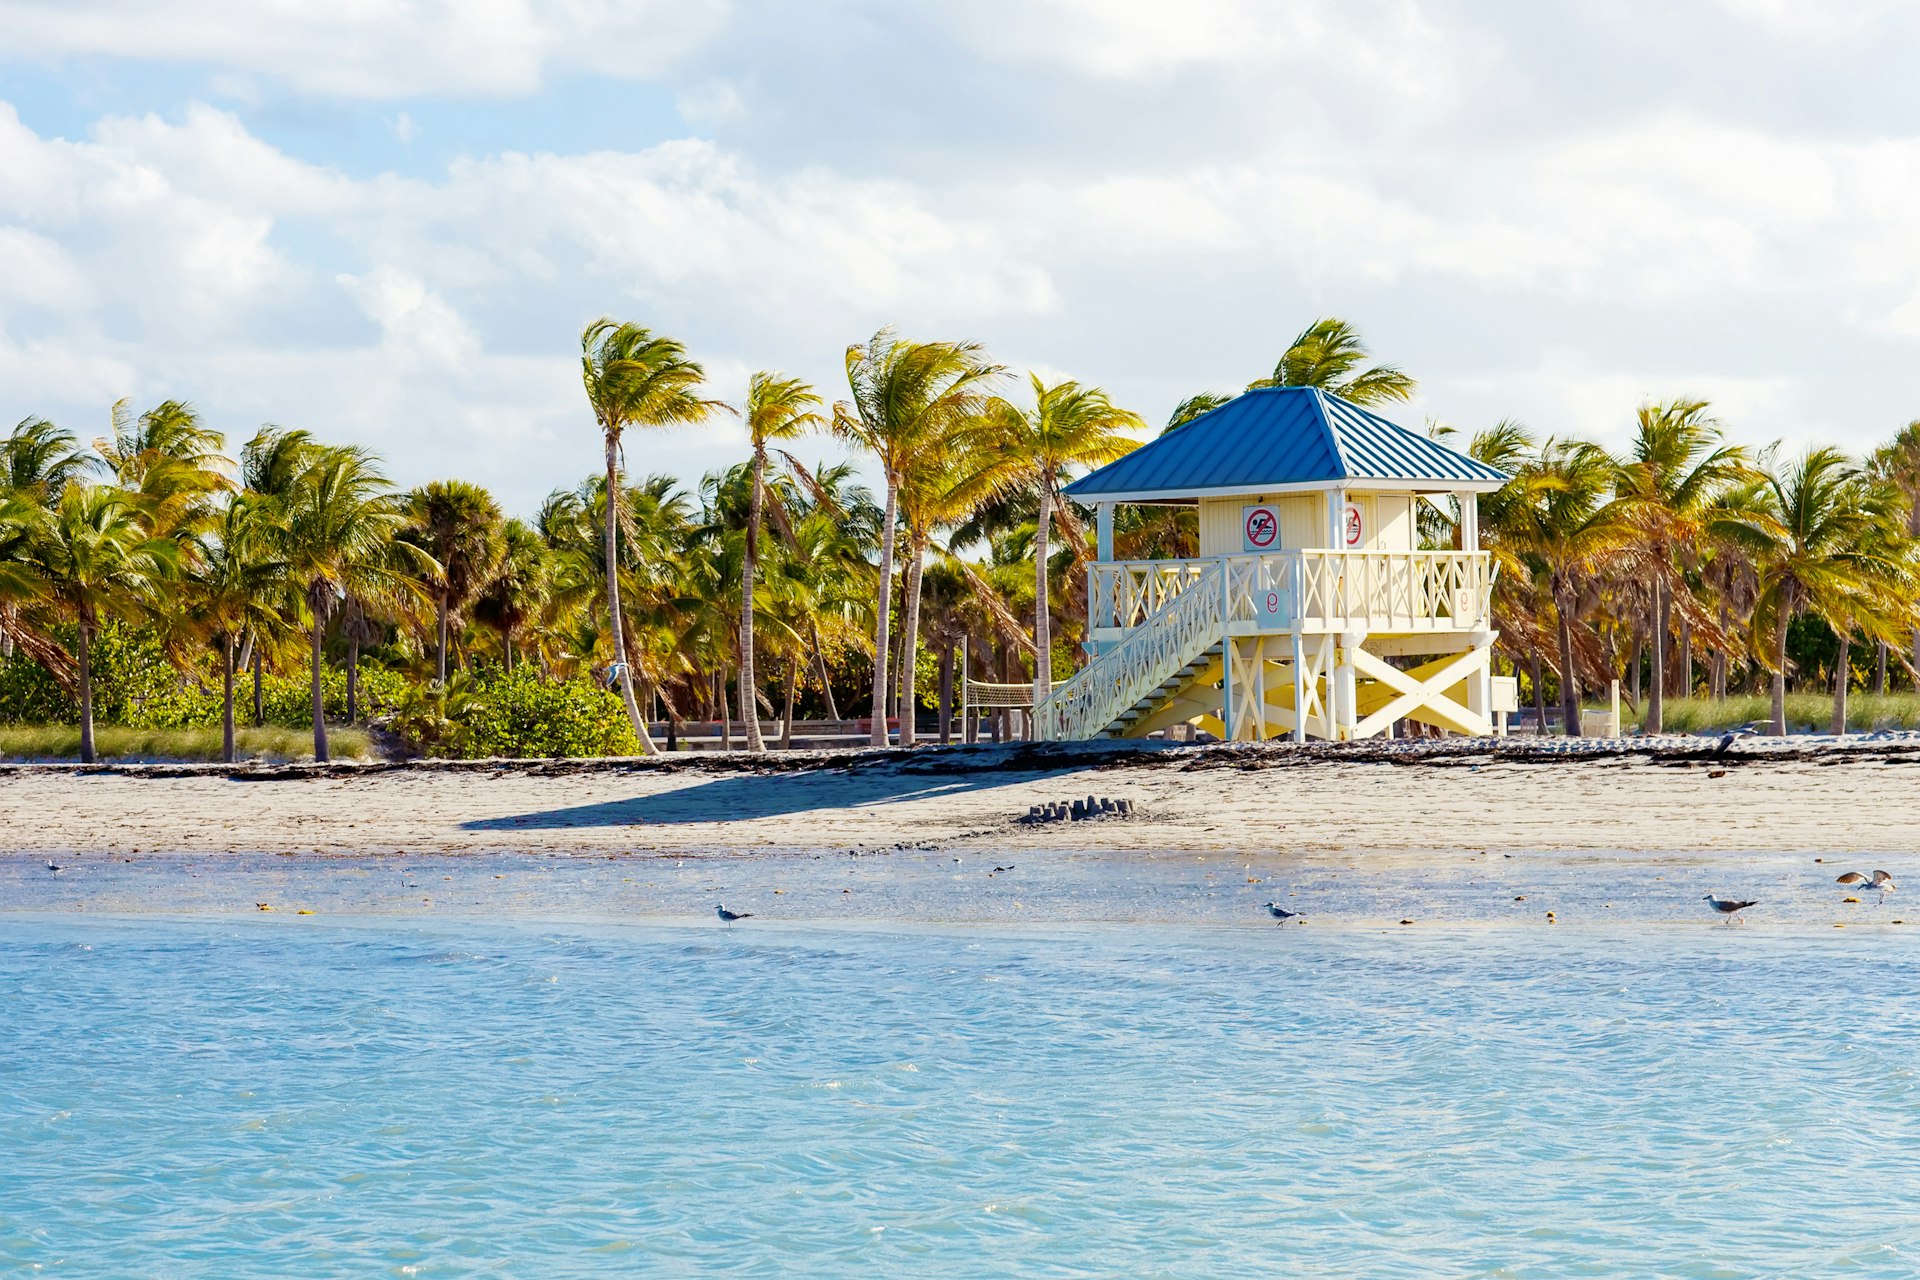 Crandon Park Beach located in Key Biscayne in Miami, Florida, USA 